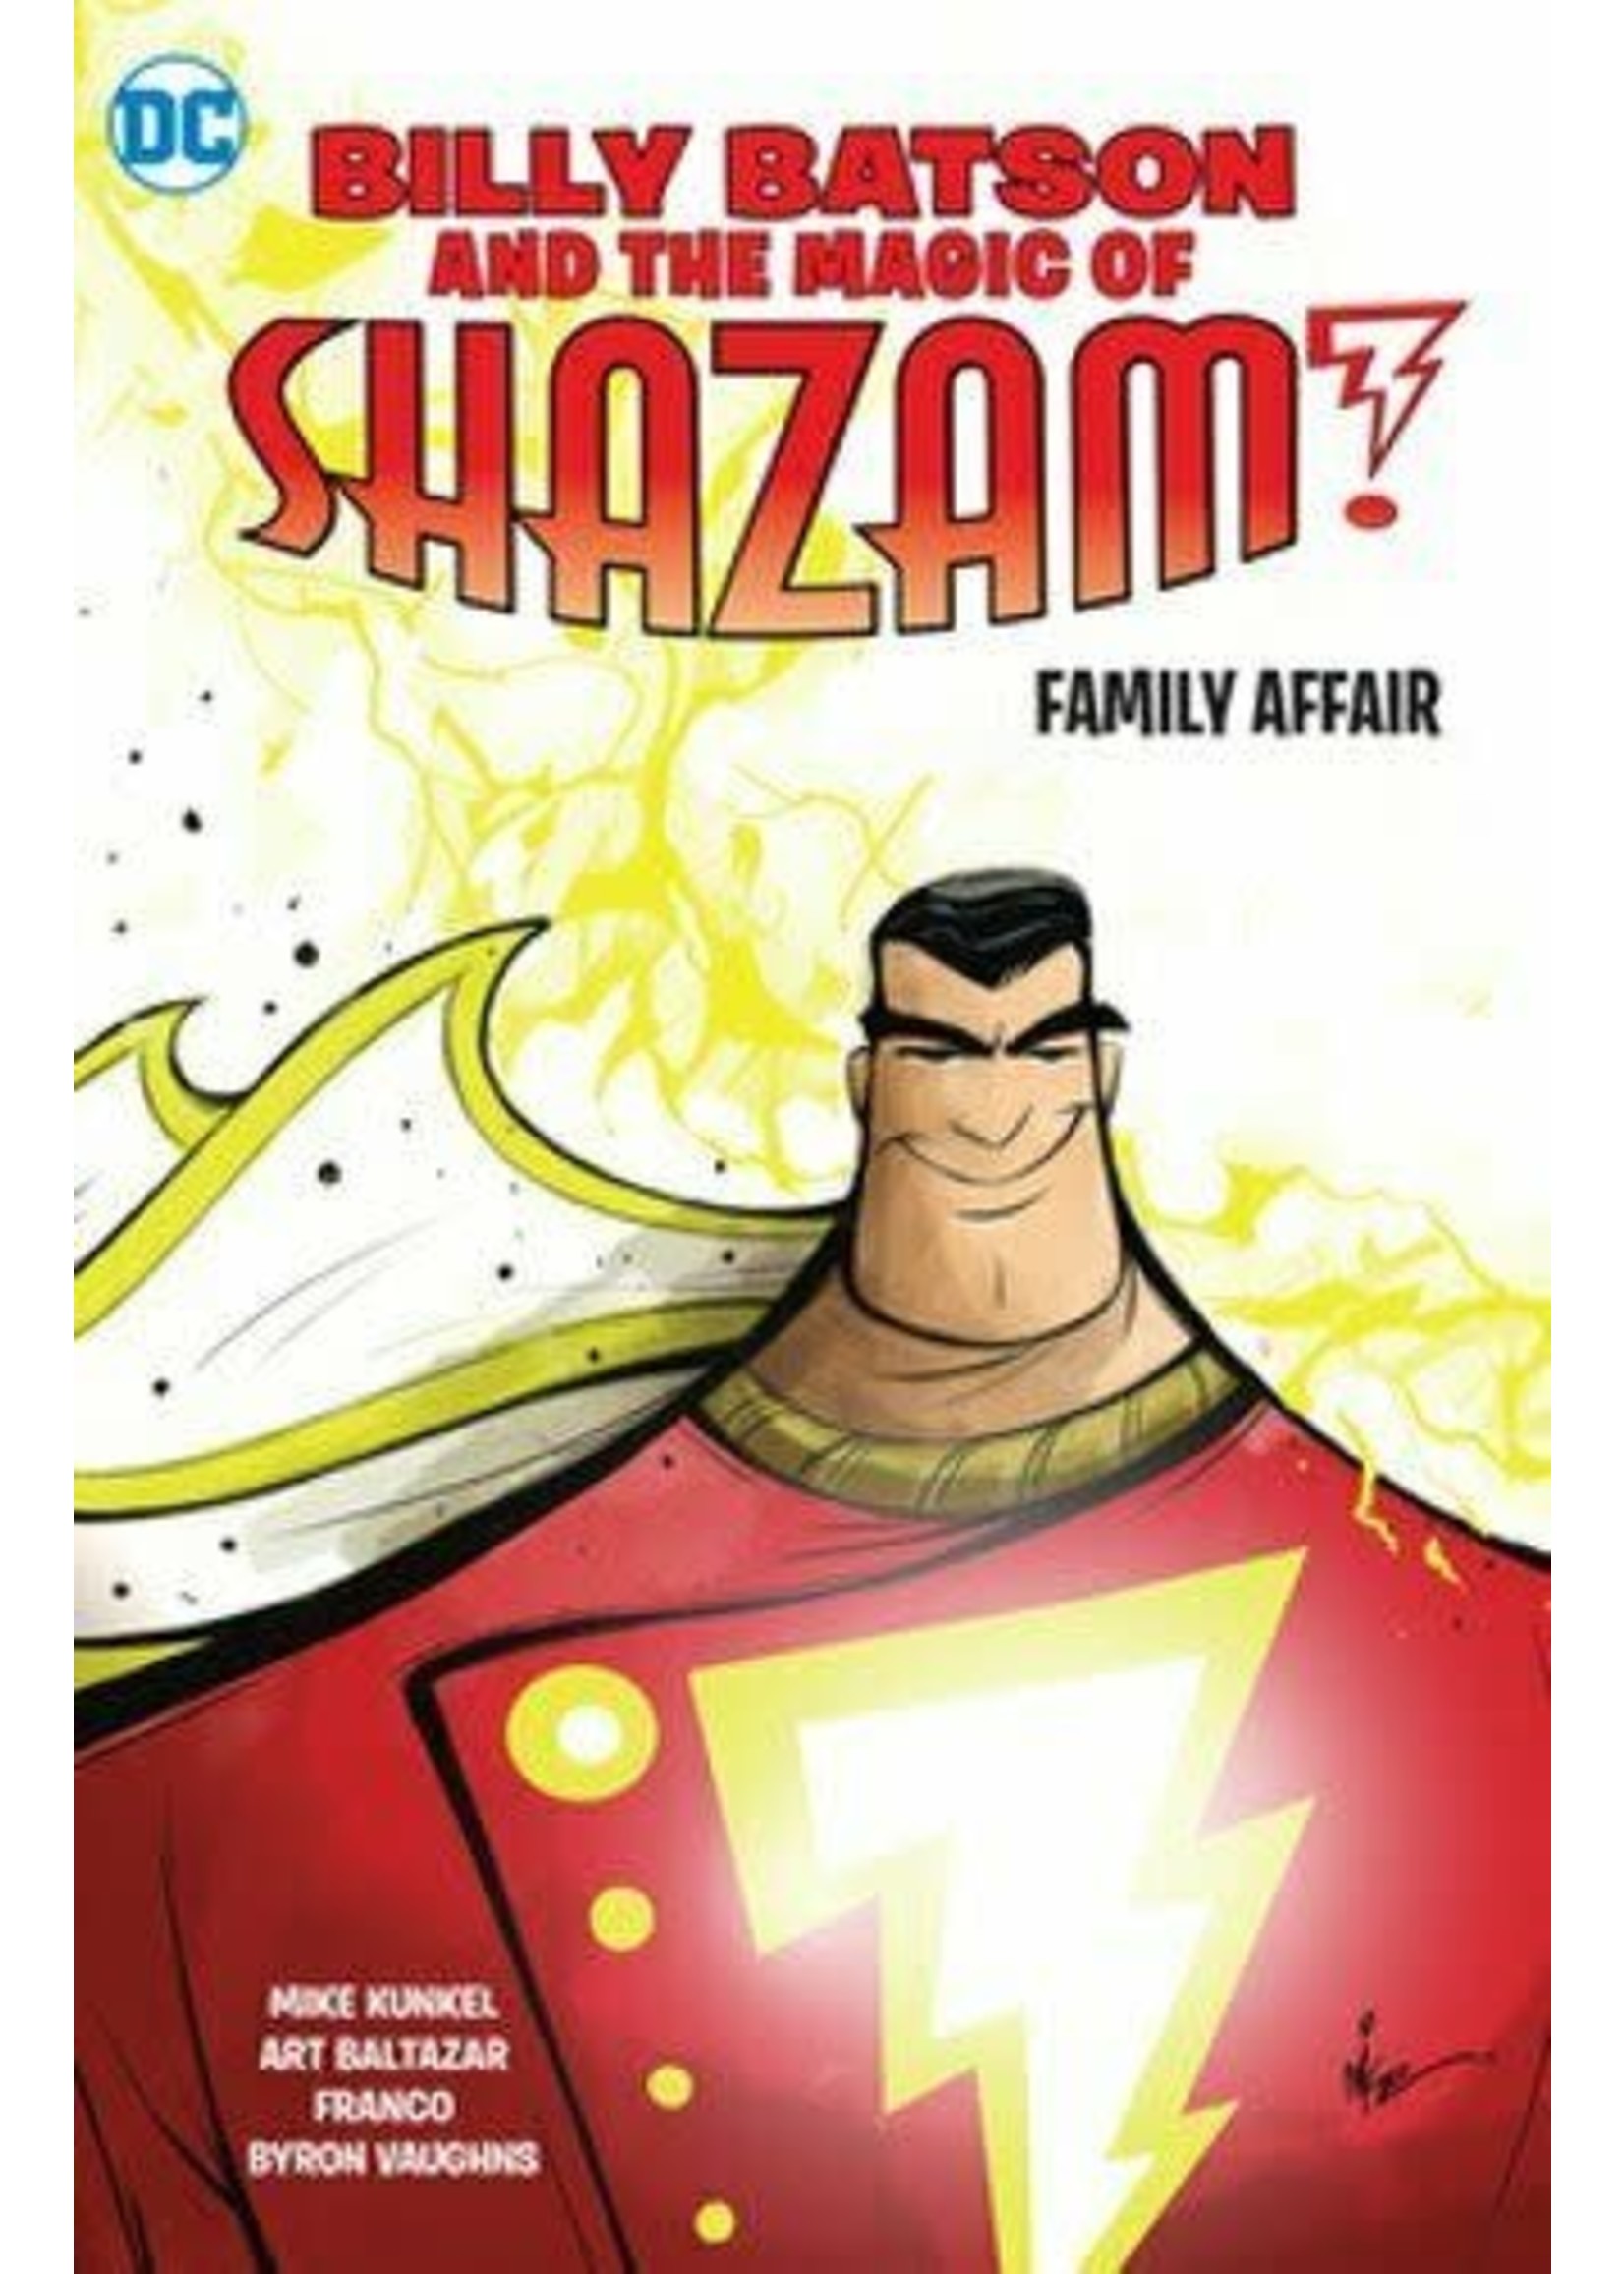 DC COMICS BILLY BATSON AND THE MAGIC OF SHAZAM! VOL 1